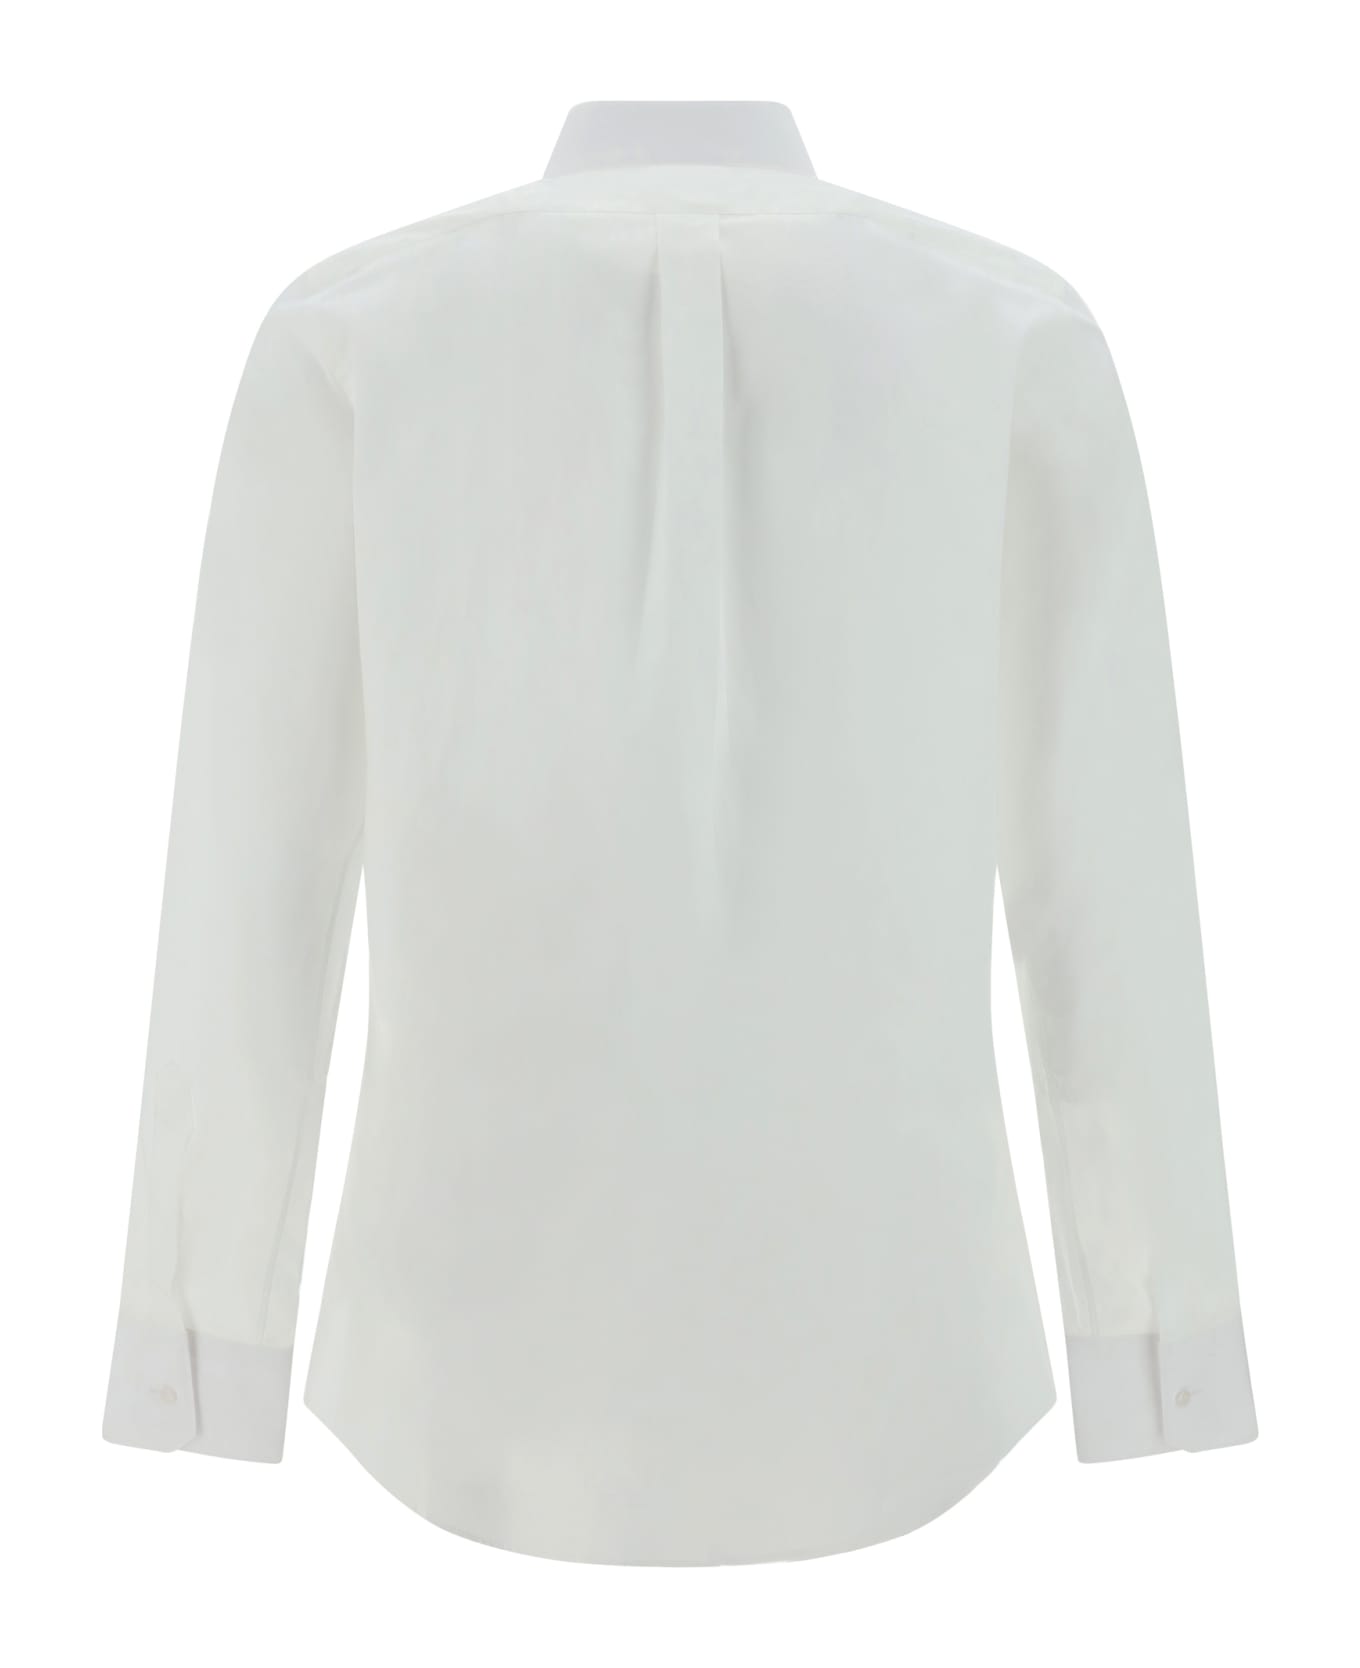 Dolce & Gabbana Cotton Shirt - Bianco Ottico シャツ